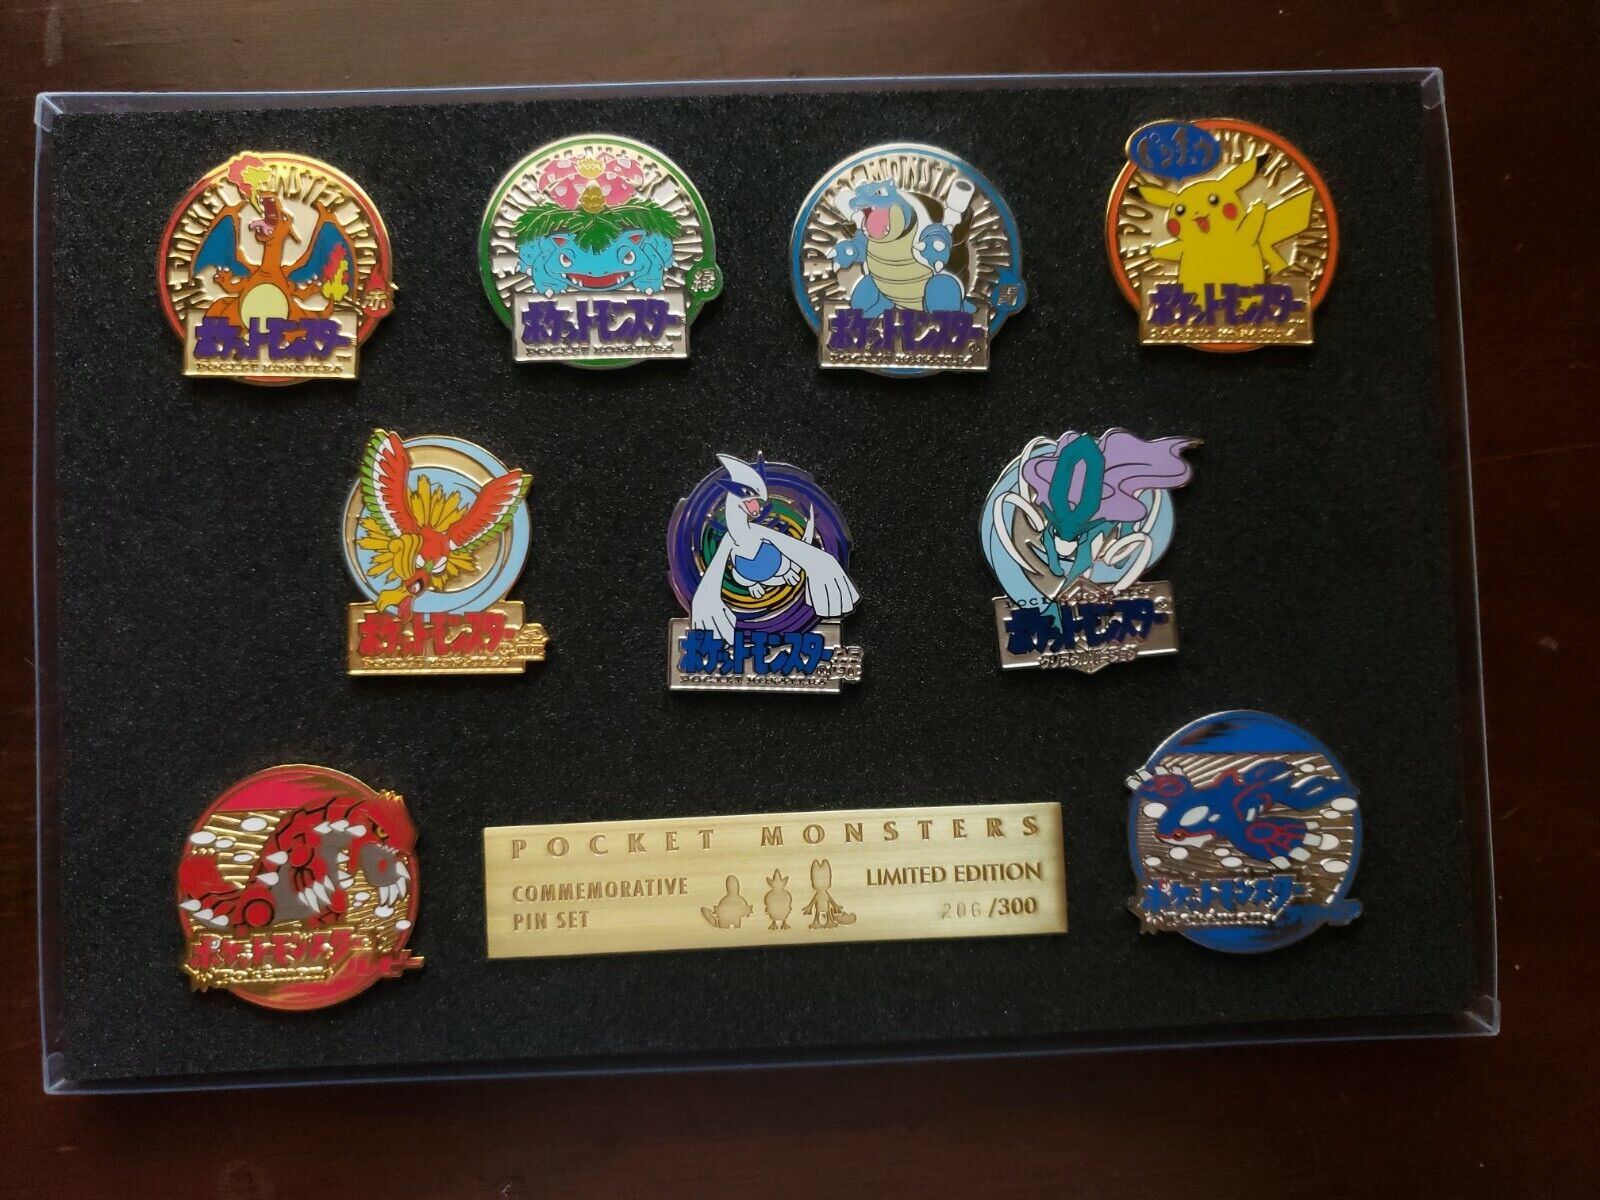 2002 Pokémon Ruby and Sapphire commemorative pinset 206/300 RARE POKEMON MERCH